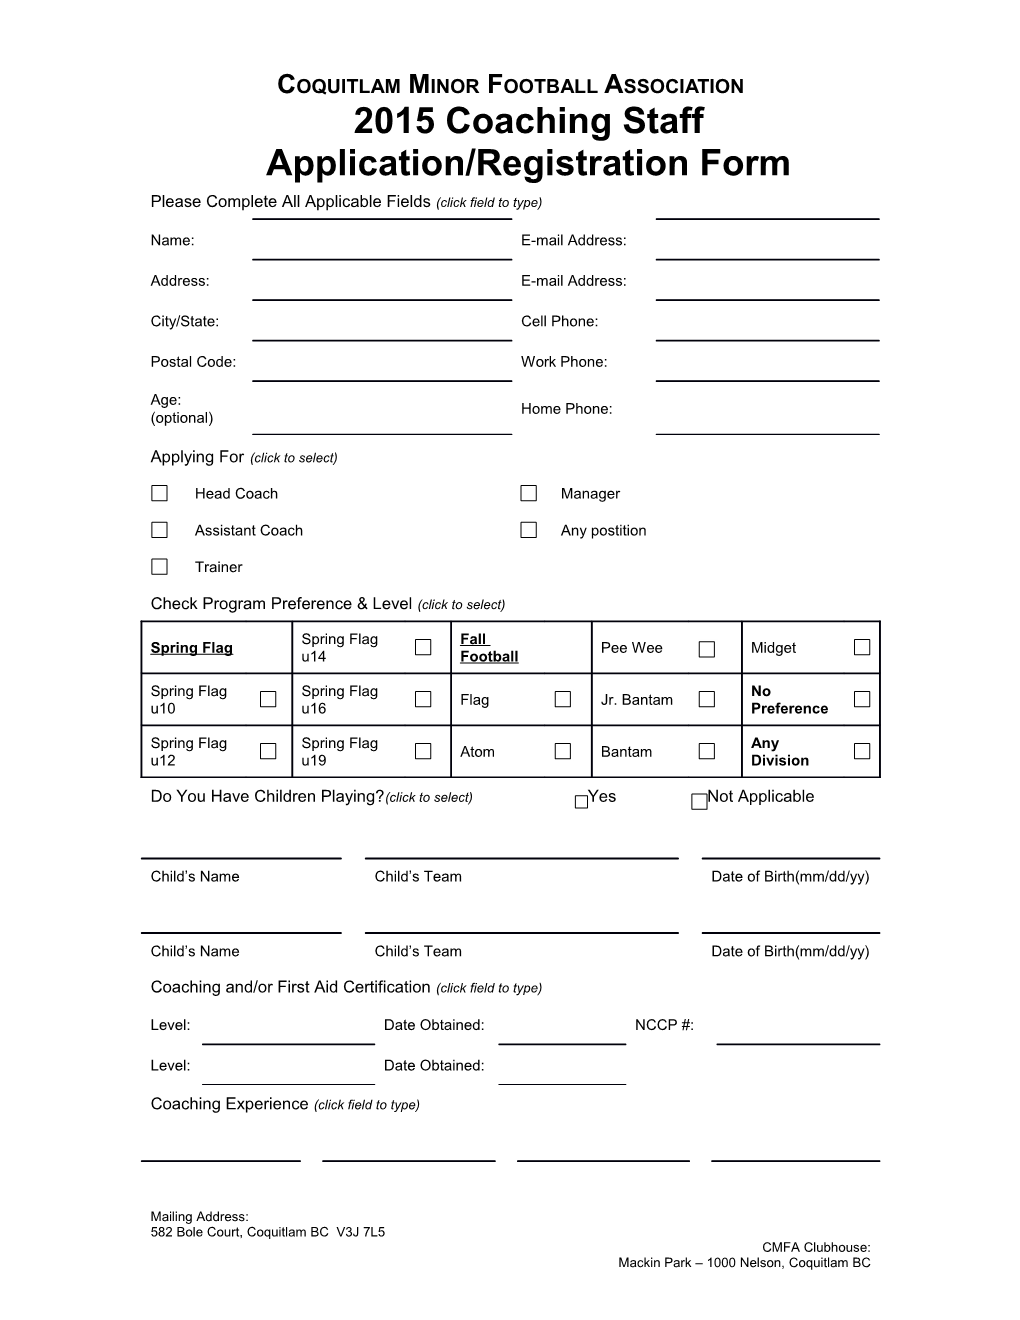 Coquitlam Minor Football Association2015 Coaching Staff Application/Registration Form